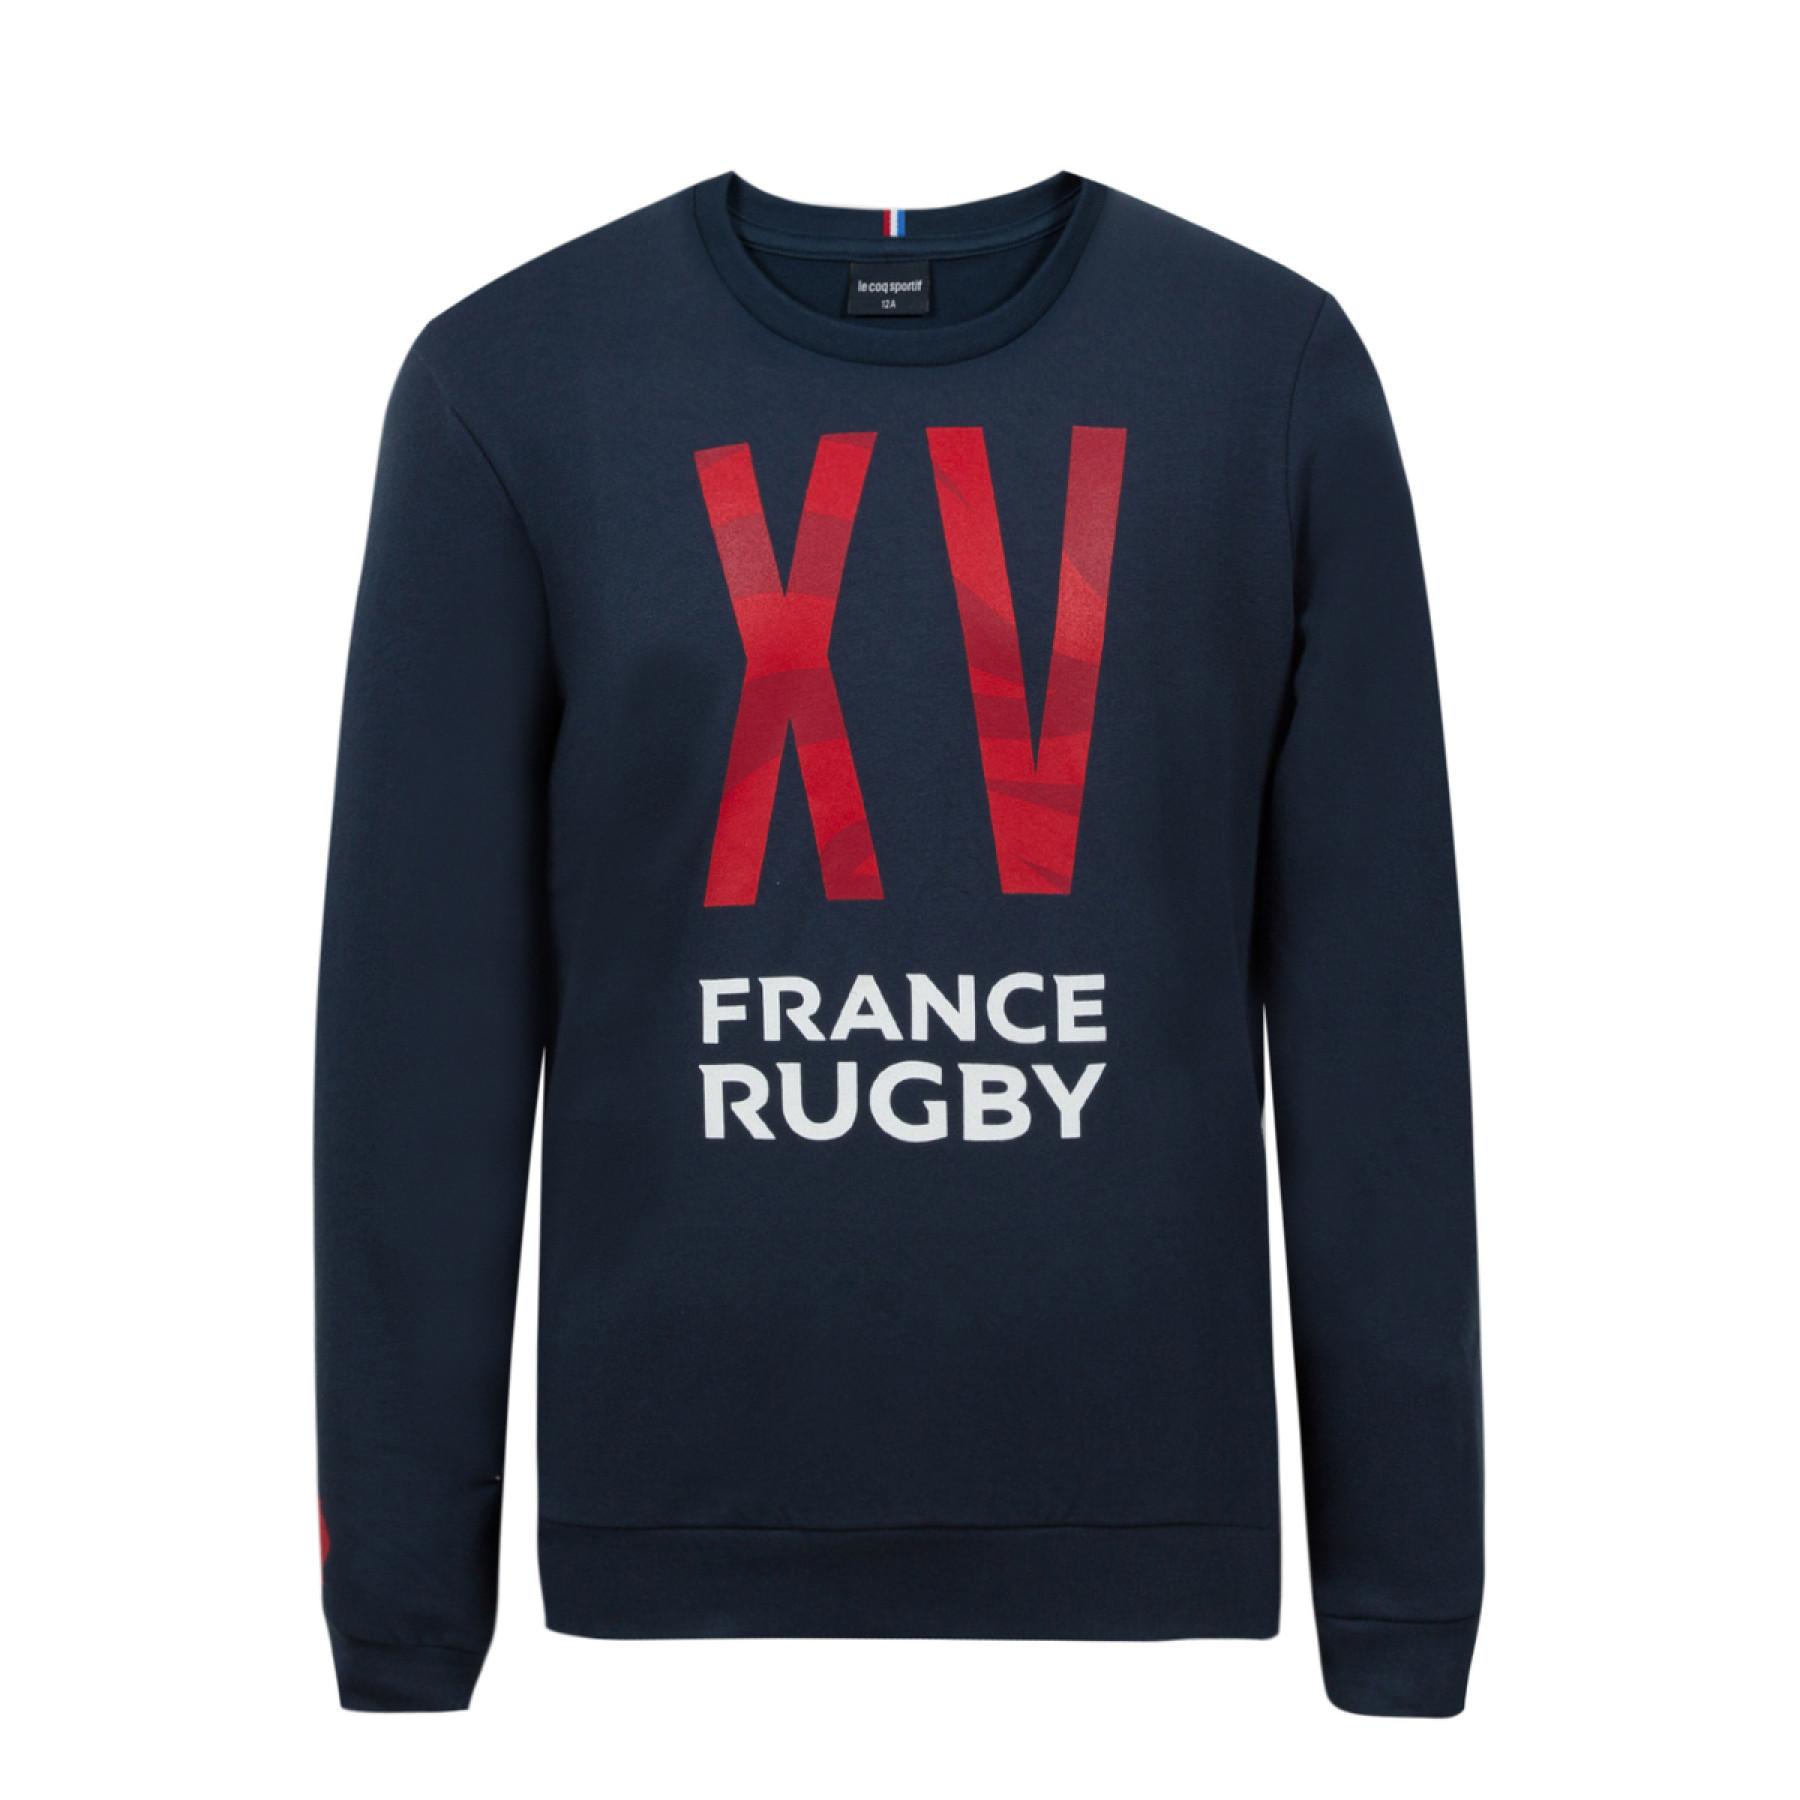 Sweatshirt kind xv van France fan n°1